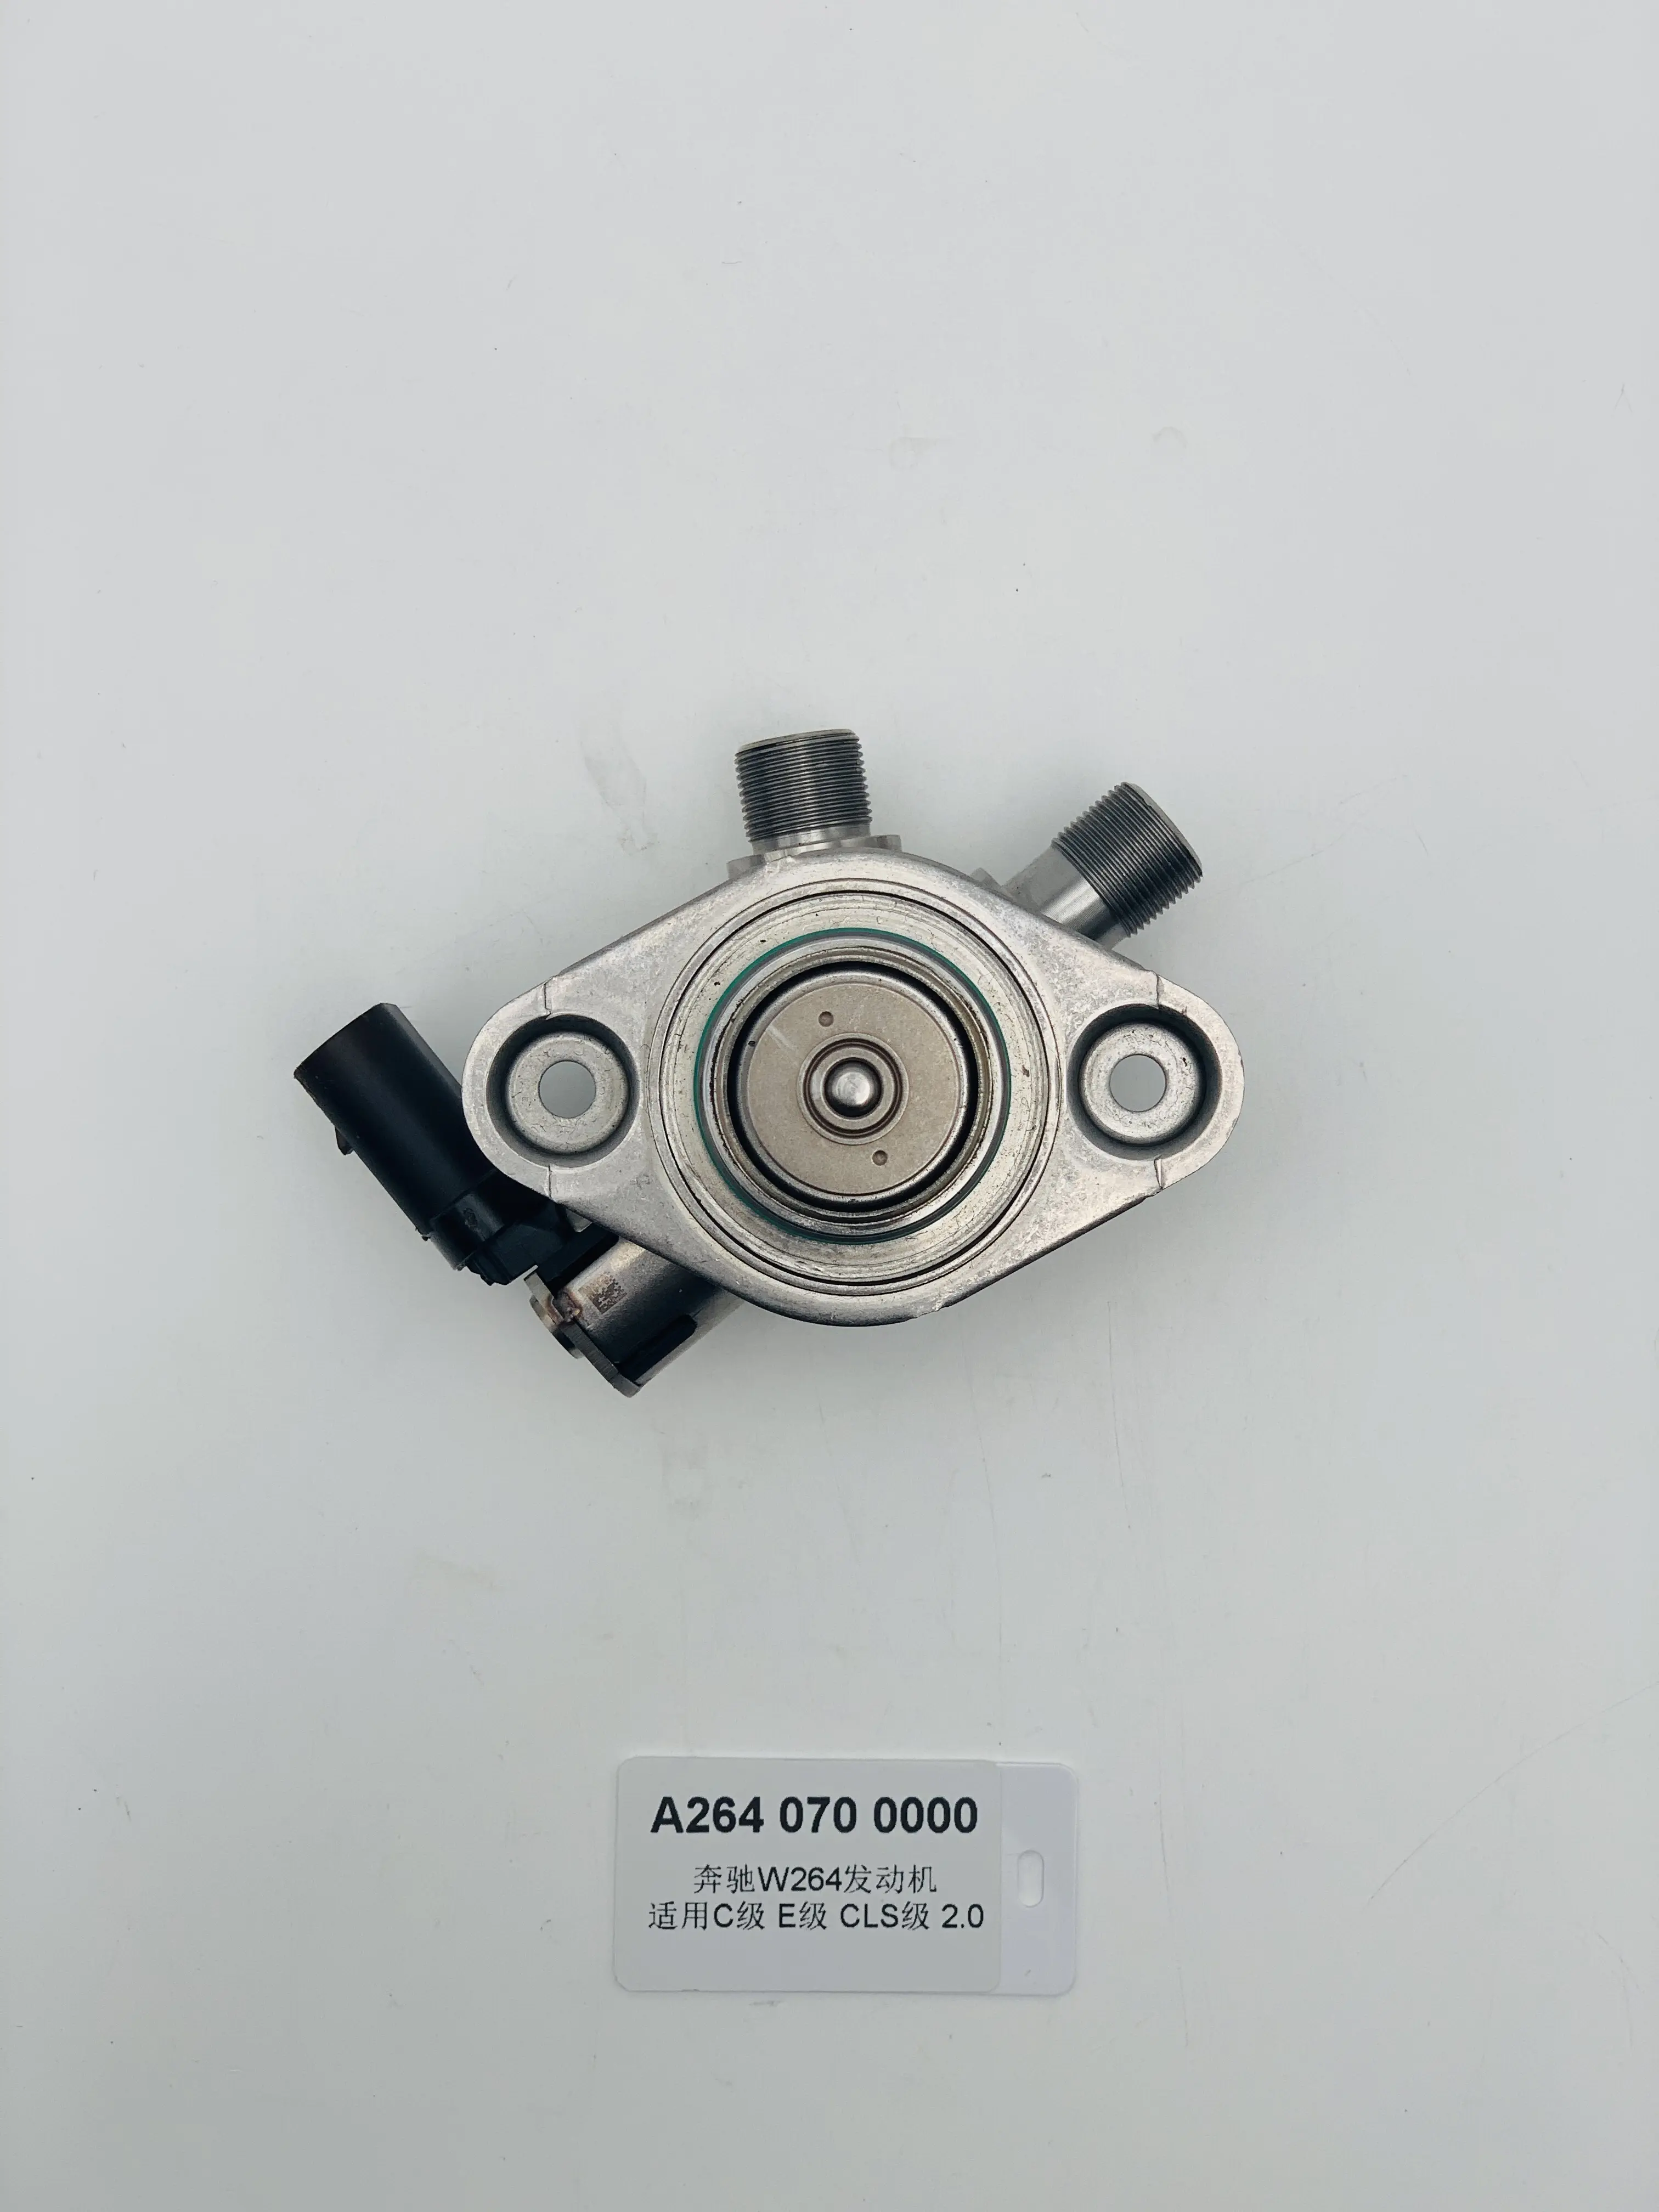 A2640700000 High Pressure Pump For Mercedes-Benz W264 engine Class C/ E/CLS 2.0